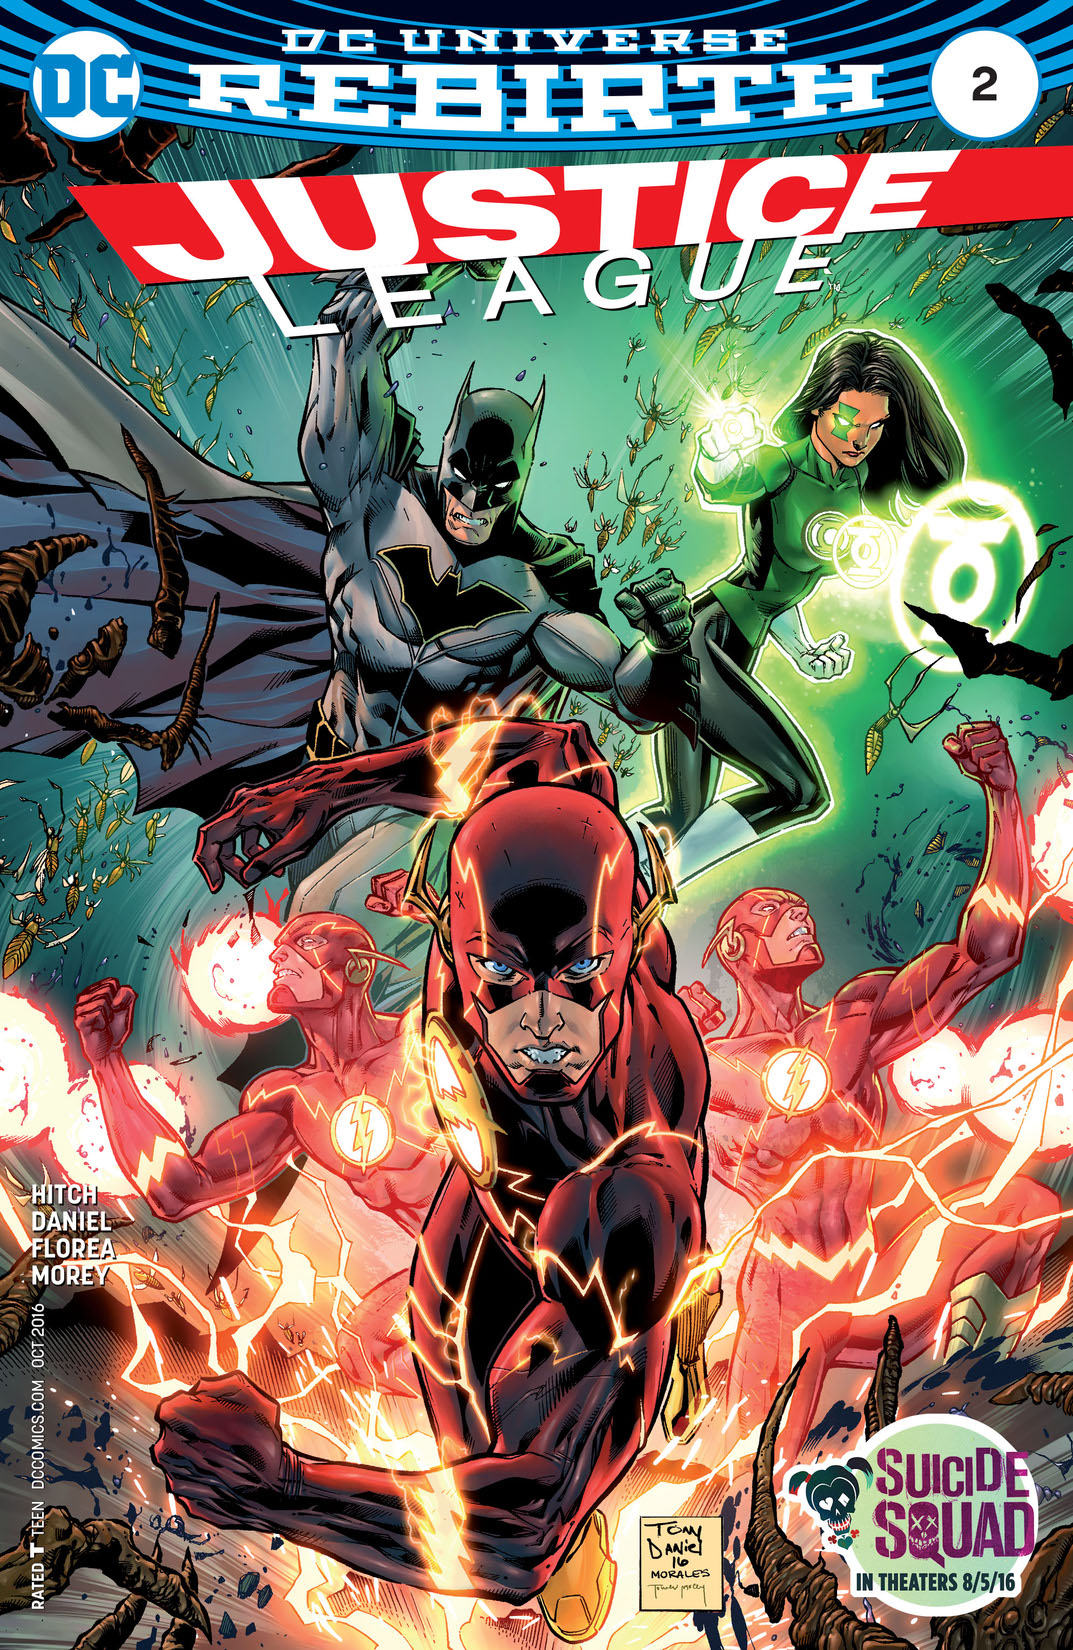 Justice League (2016-) #2 preview images